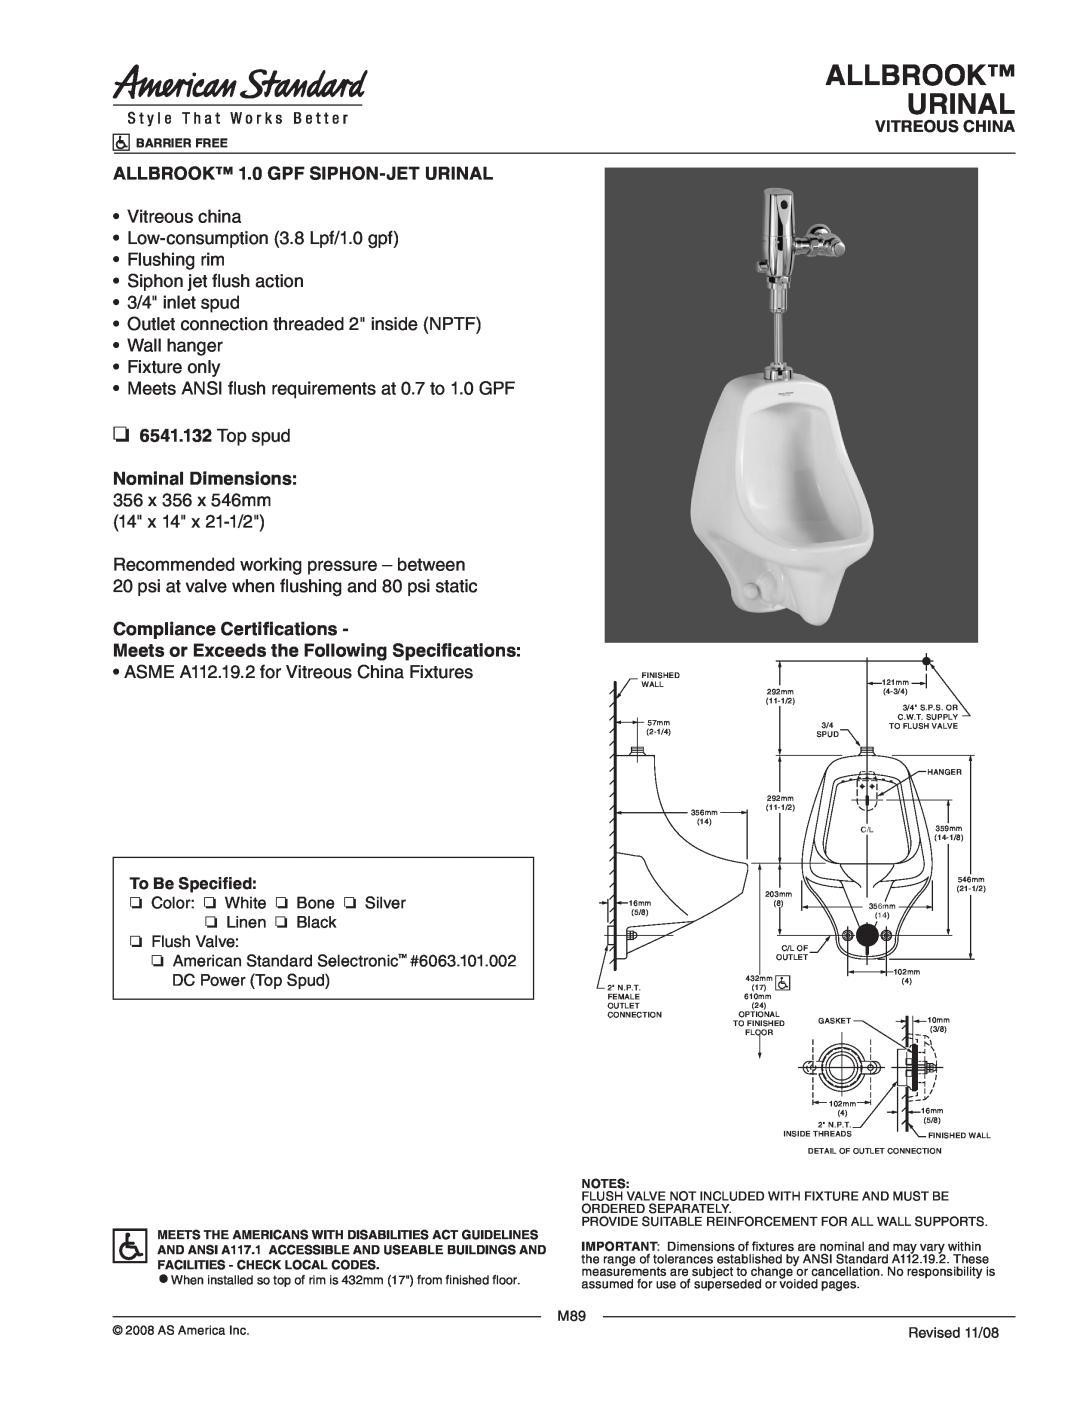 American Standard 6541.132 dimensions Allbrook Urinal, ALLBROOK 1.0 GPF SIPHON-JETURINAL, 3/4 inlet spud, Top spud 